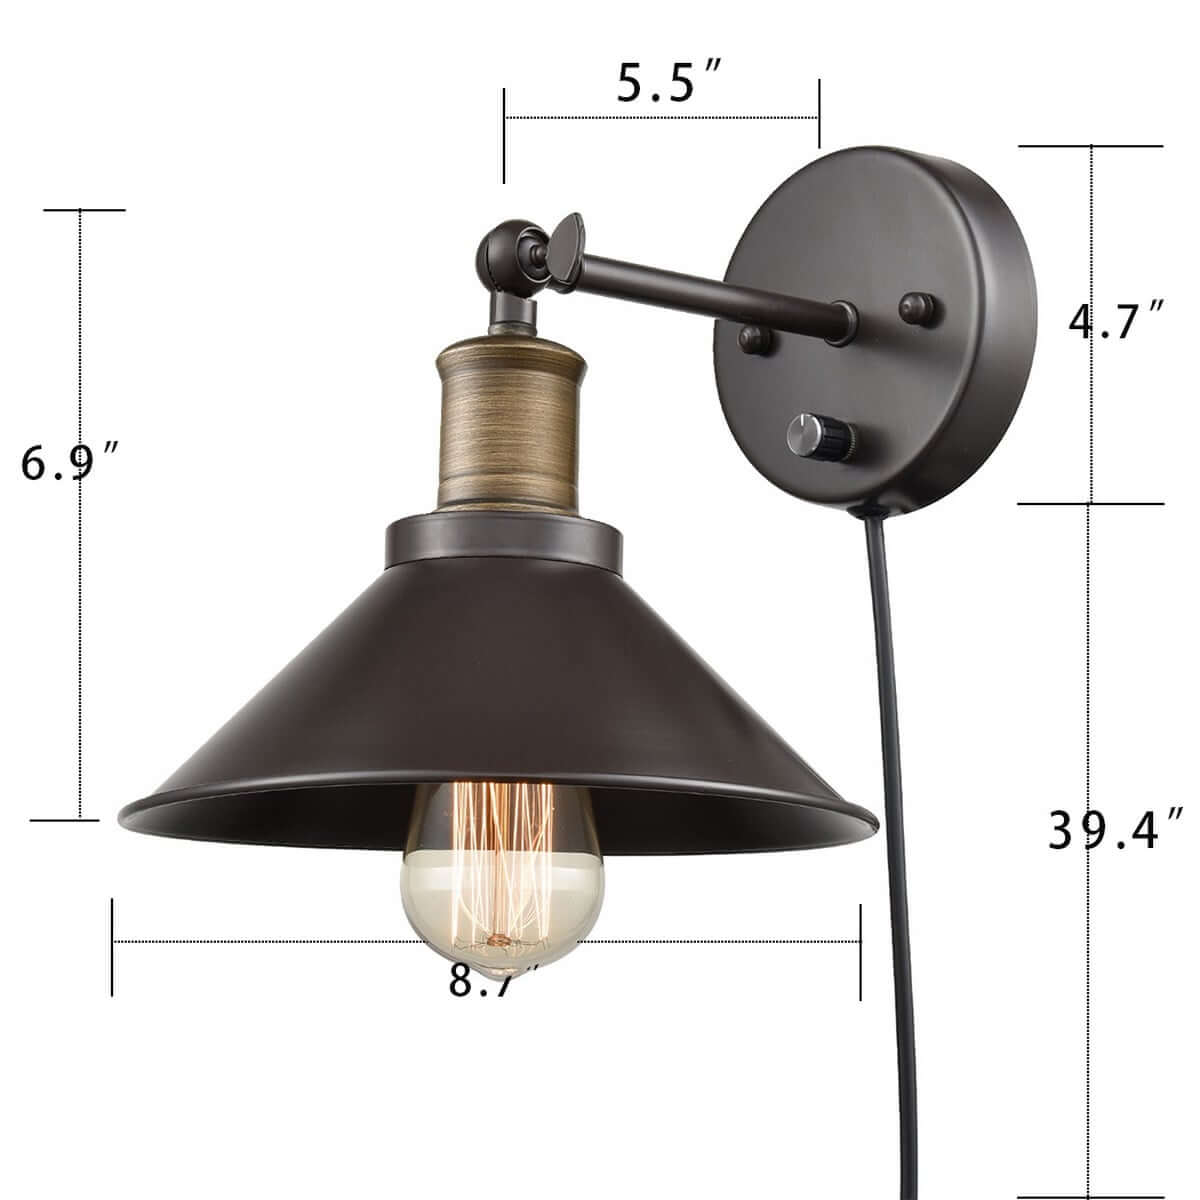 Industrial Bronze Swing Arm Plug-in Wall Lights 2 Pack